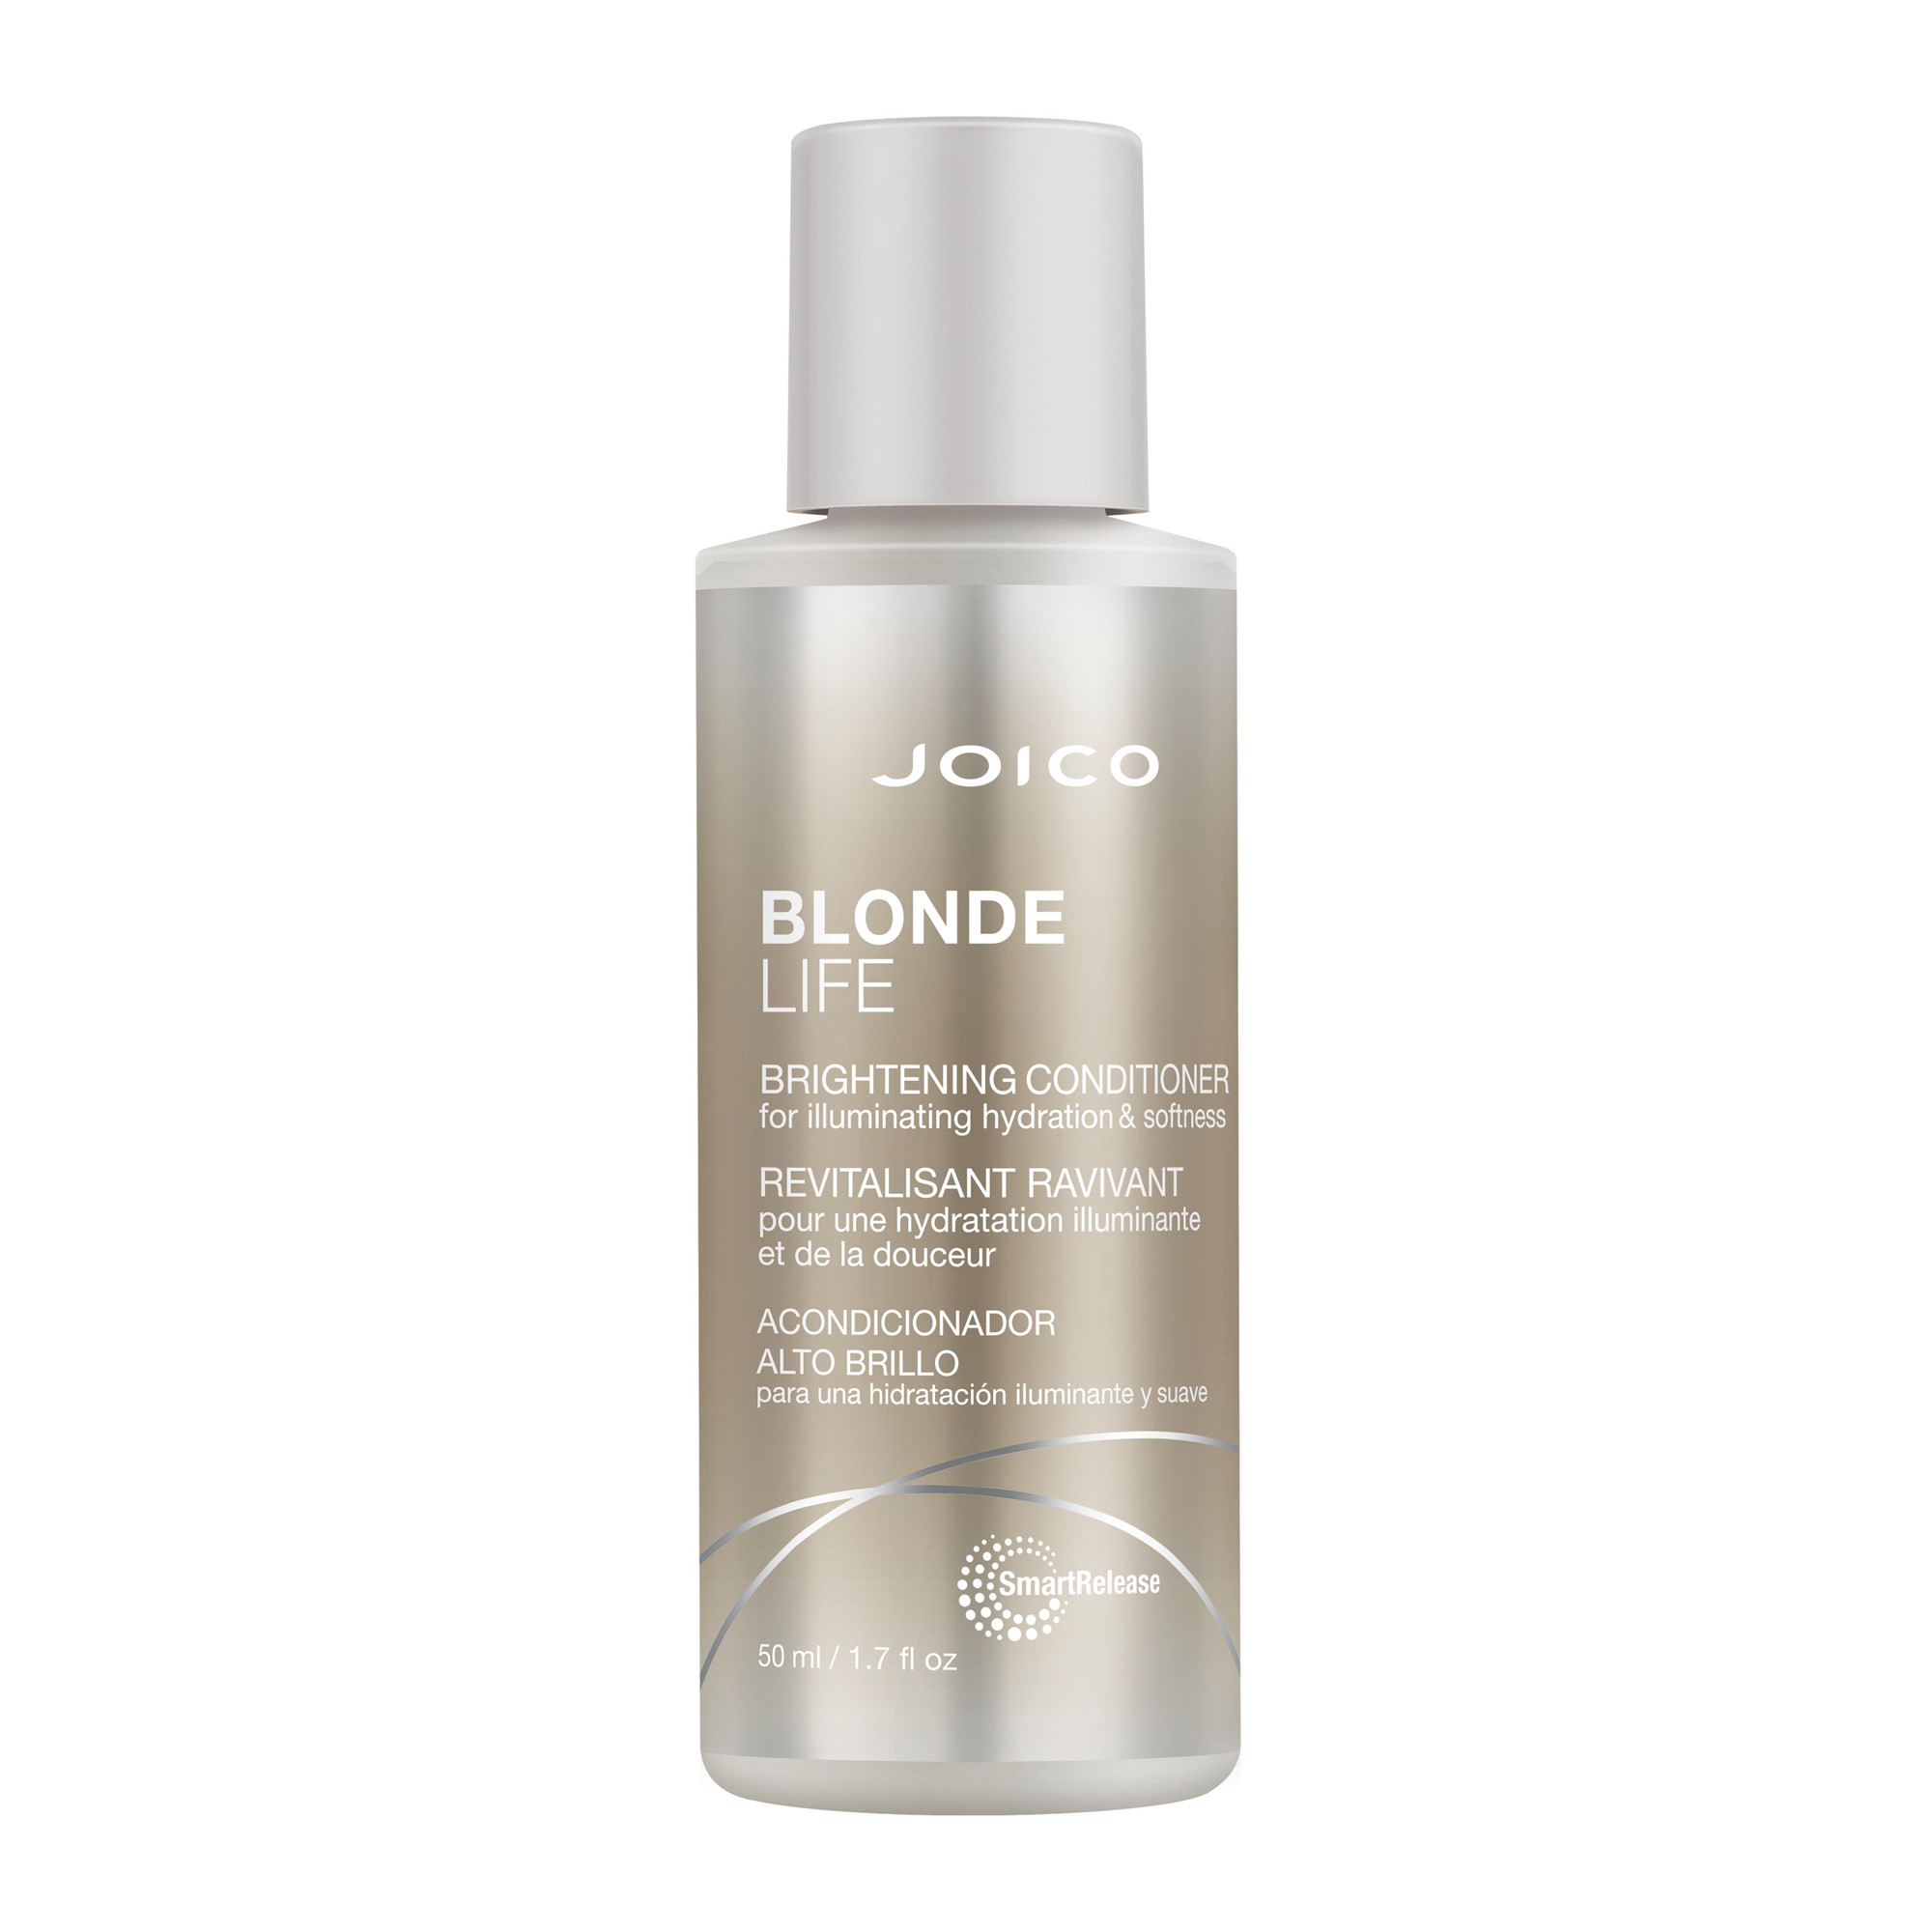 Joico Blonde Life Brightening Conditioner Кондиционер для сохранения яркости блонда